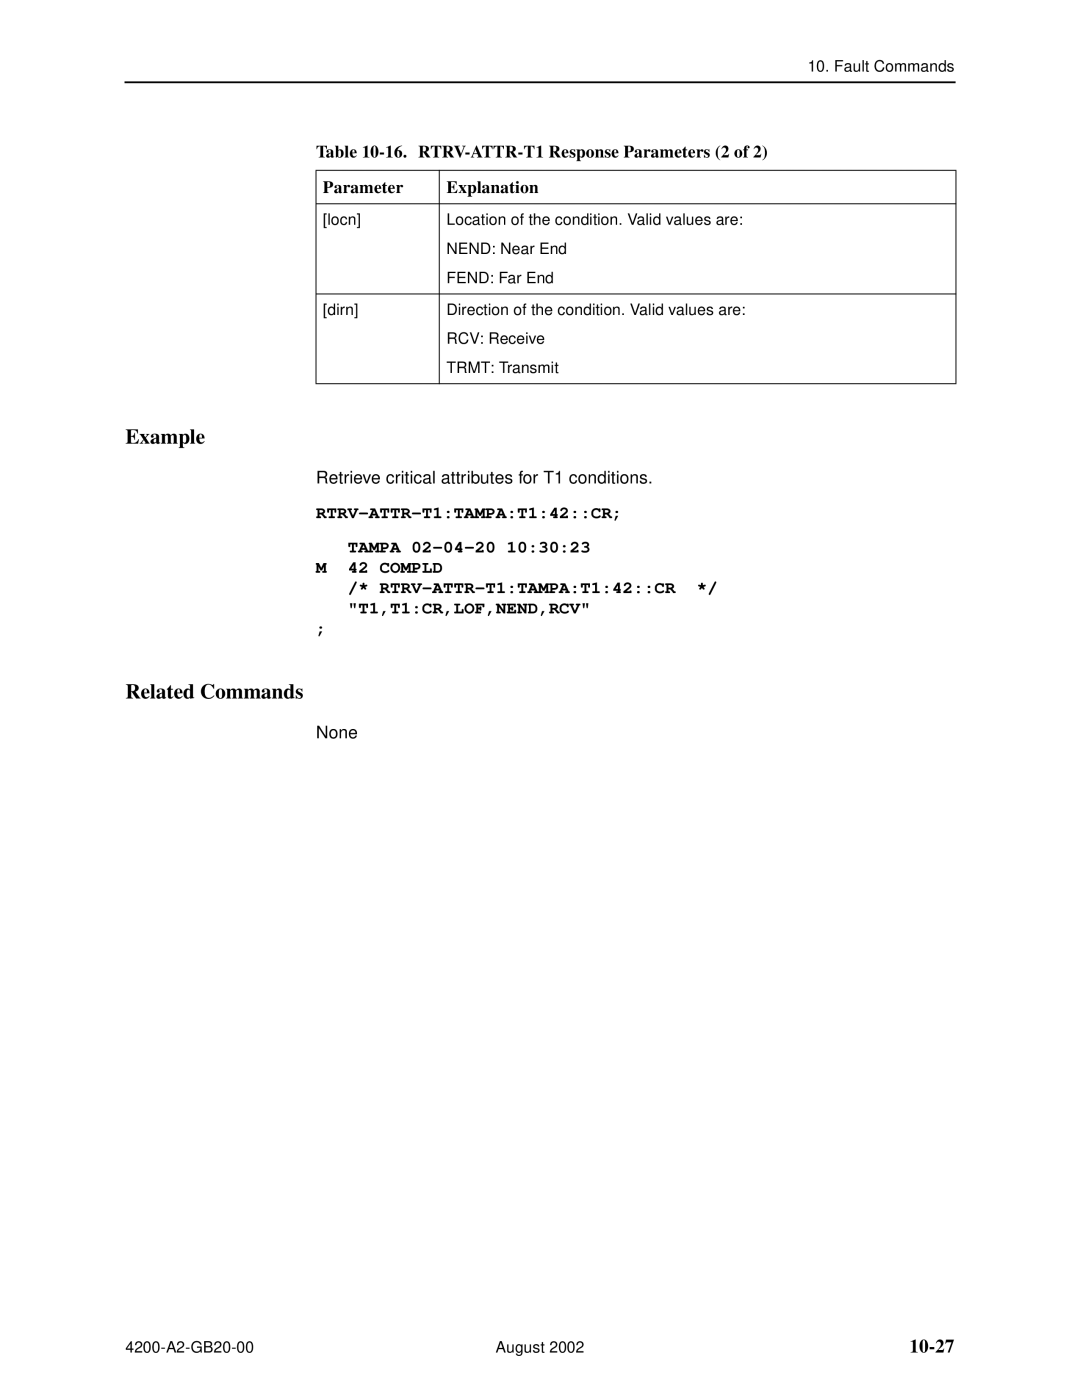 Paradyne 4200 manual 10-27, 16. RTRV-ATTR-T1 Response Parameters 2 of, RTRV-ATTR-T1TAMPAT142CR TAMPA 02-04-20 M 42 COMPLD 